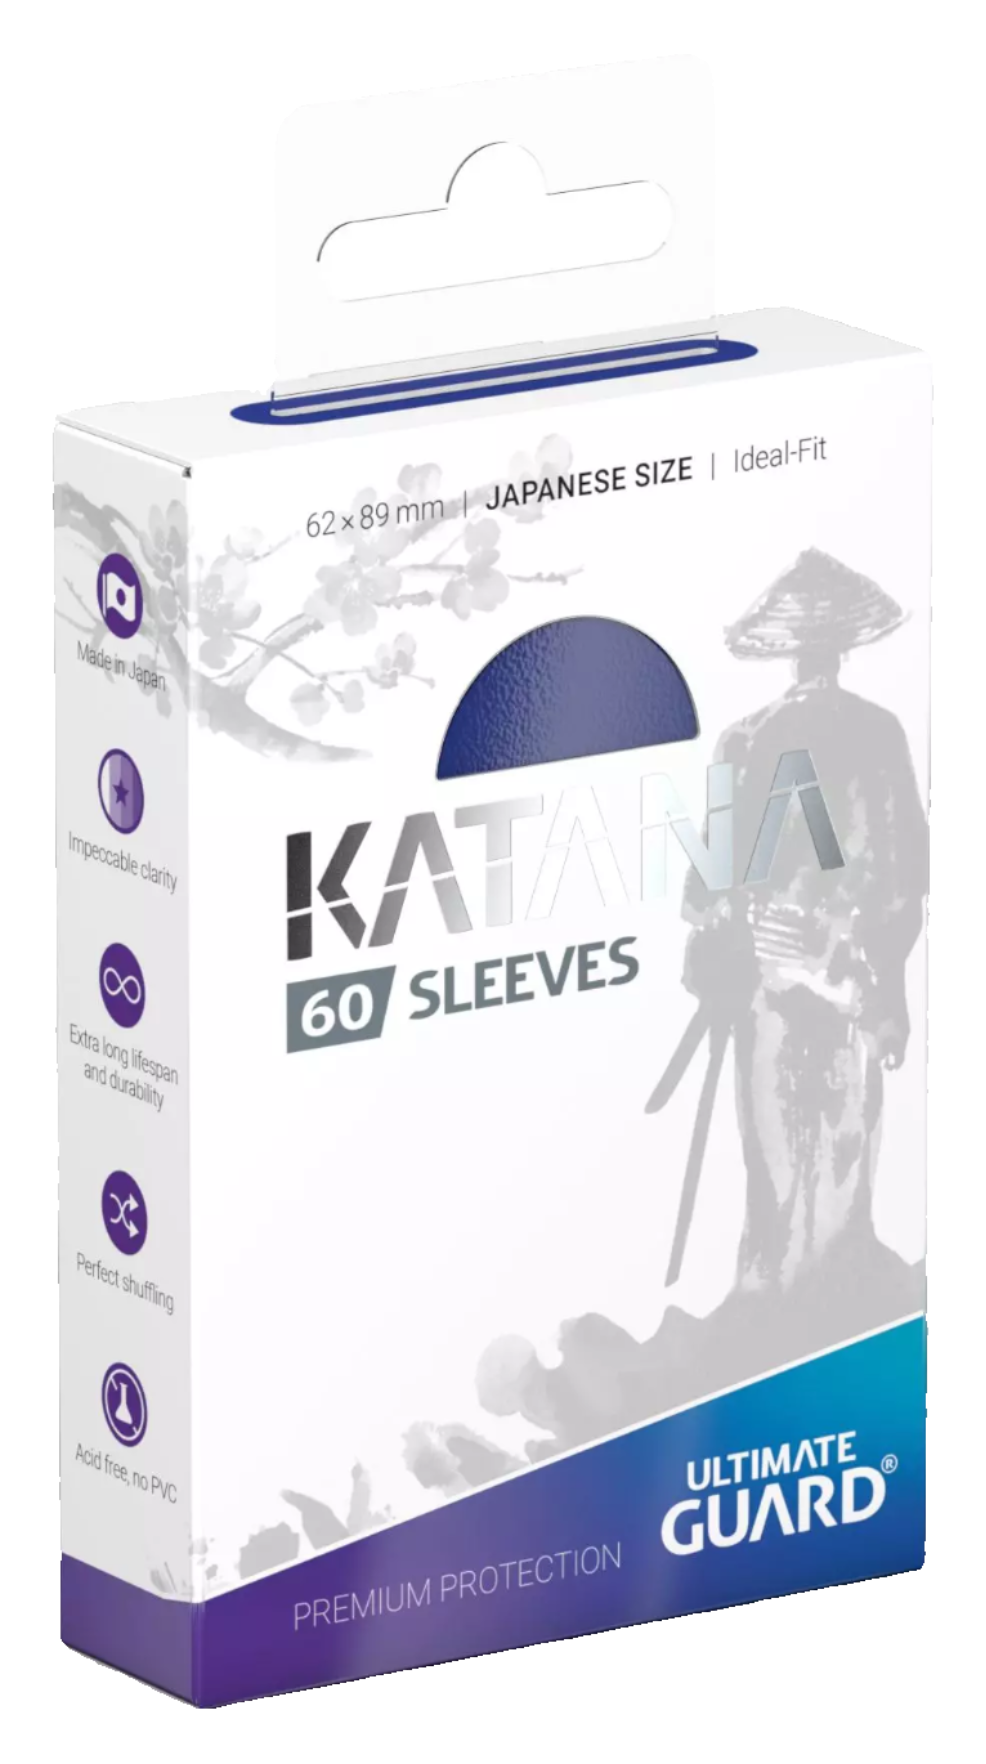 Ultimate Guard - Katana Sleeves - Japanese Size - Ideal-Fit - Blue - 60pk